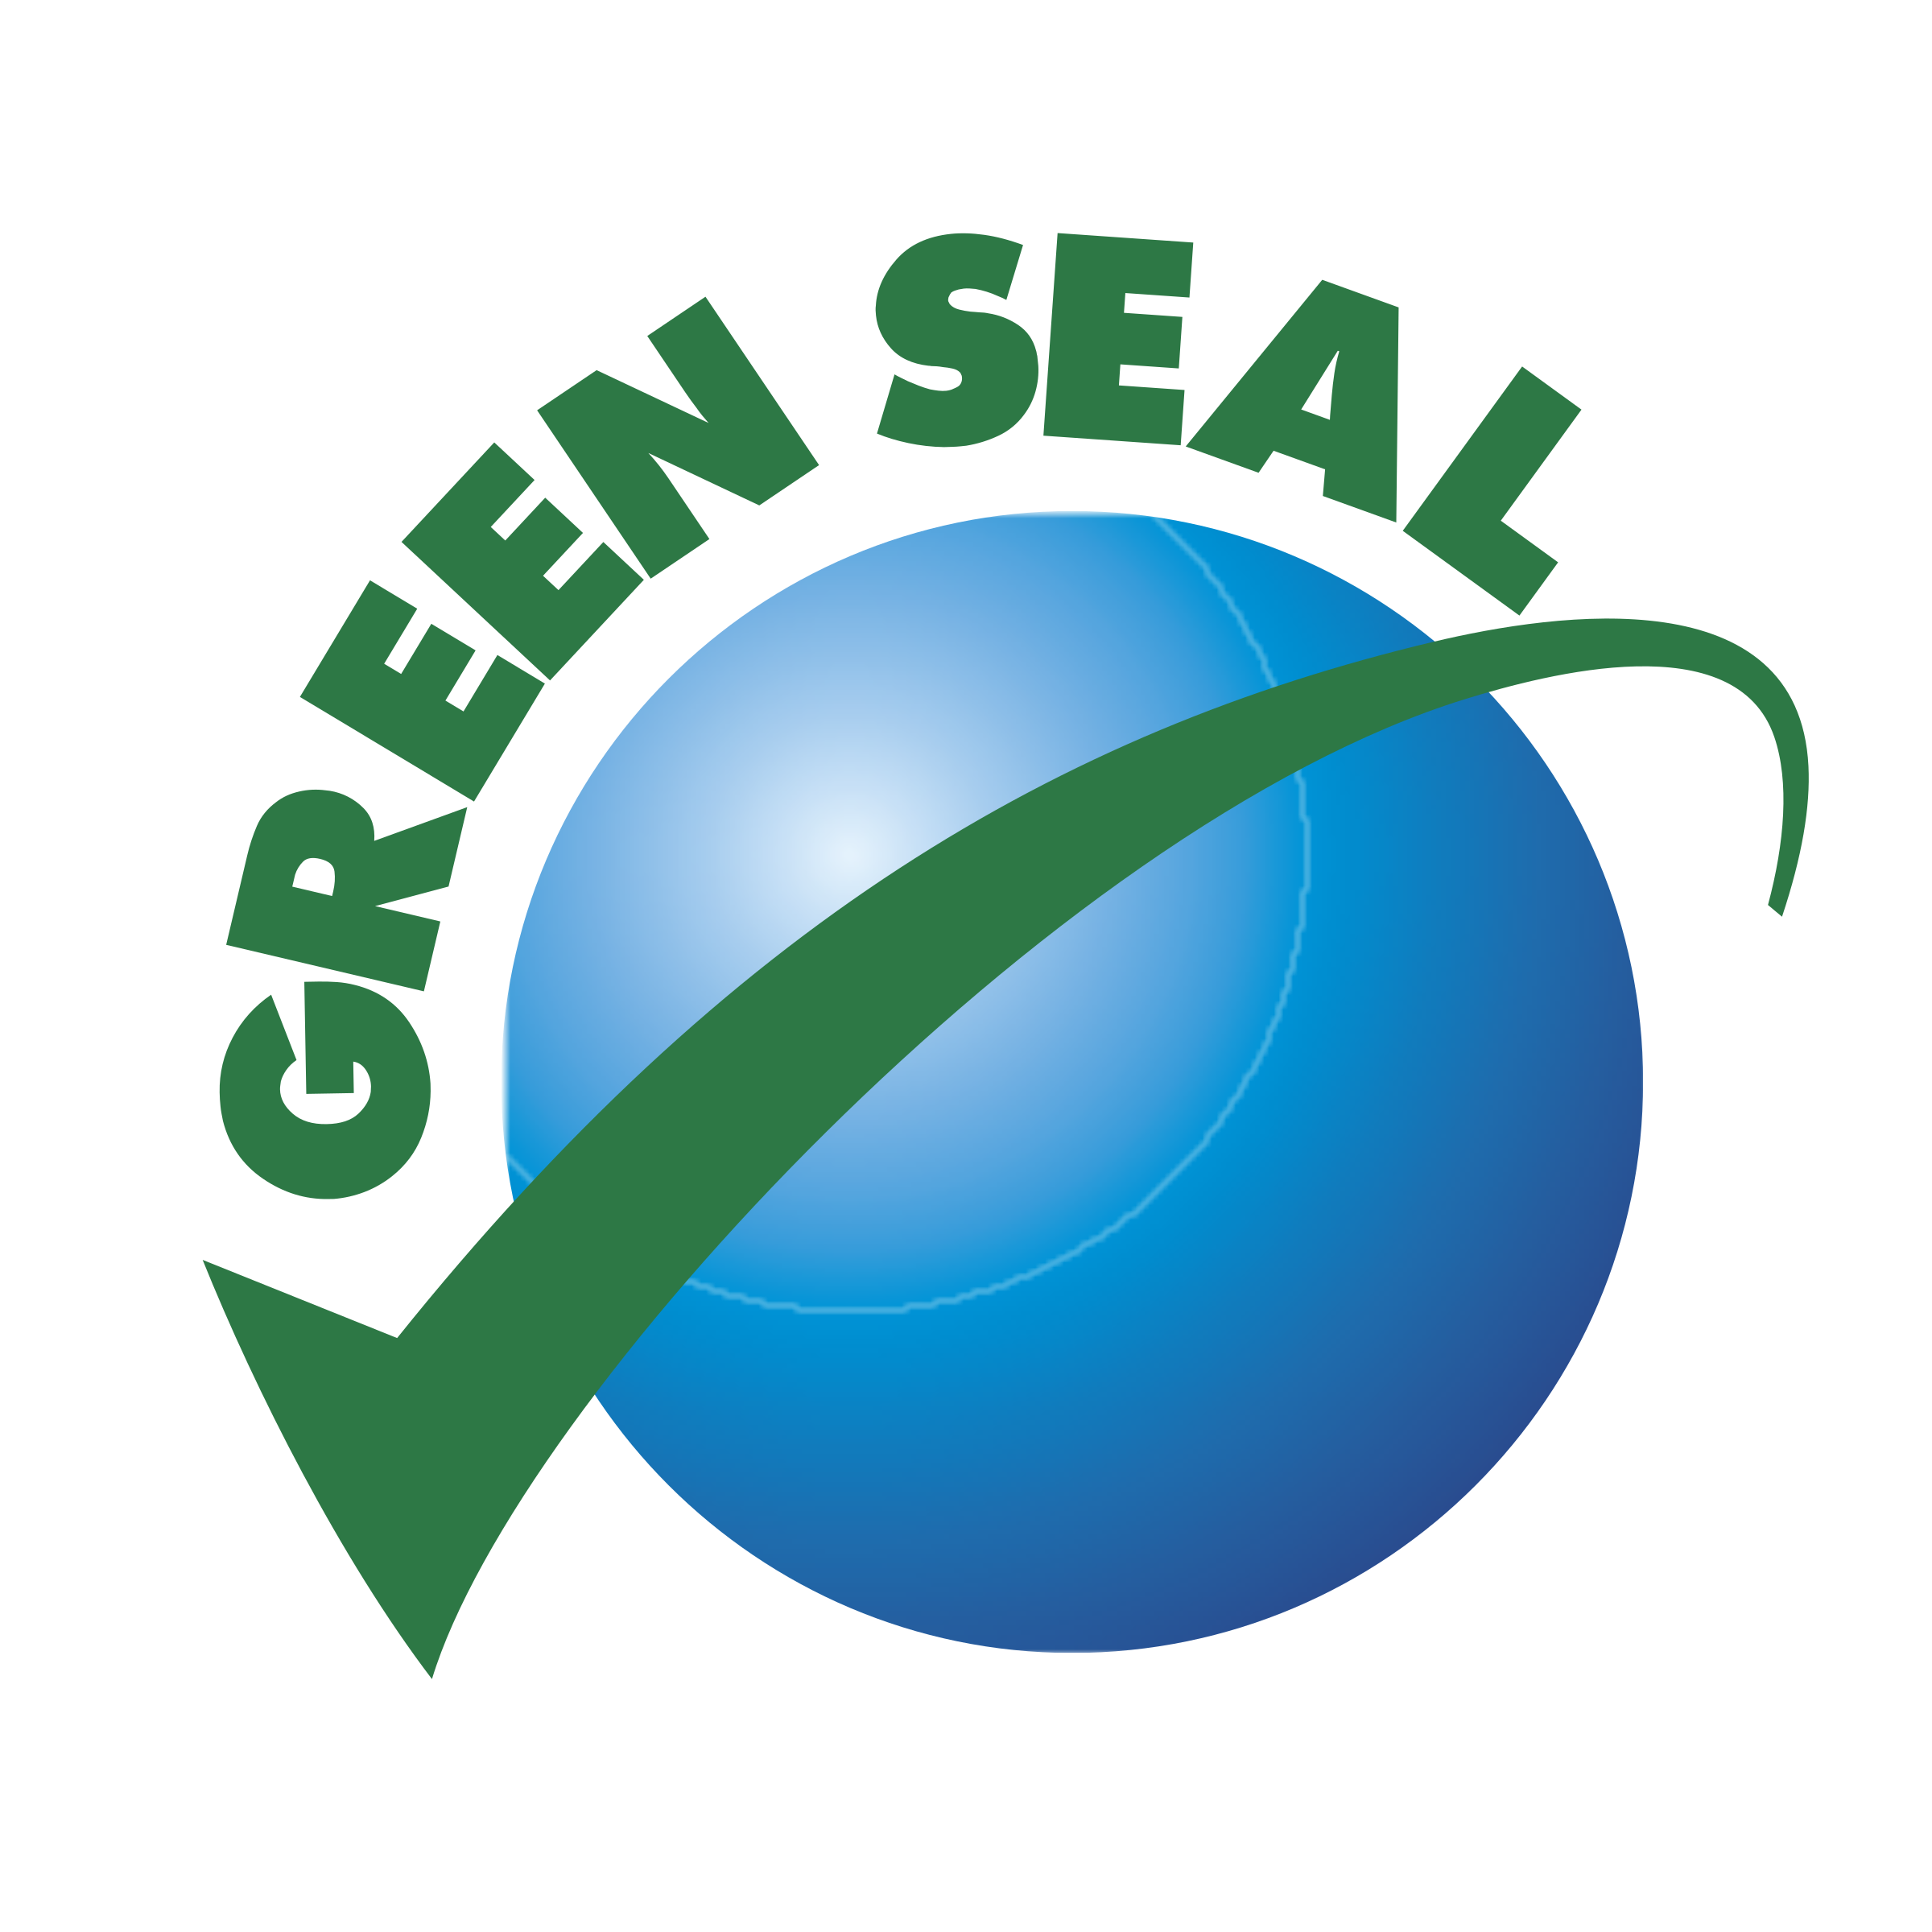 green-seal-logo-png-transparent.png